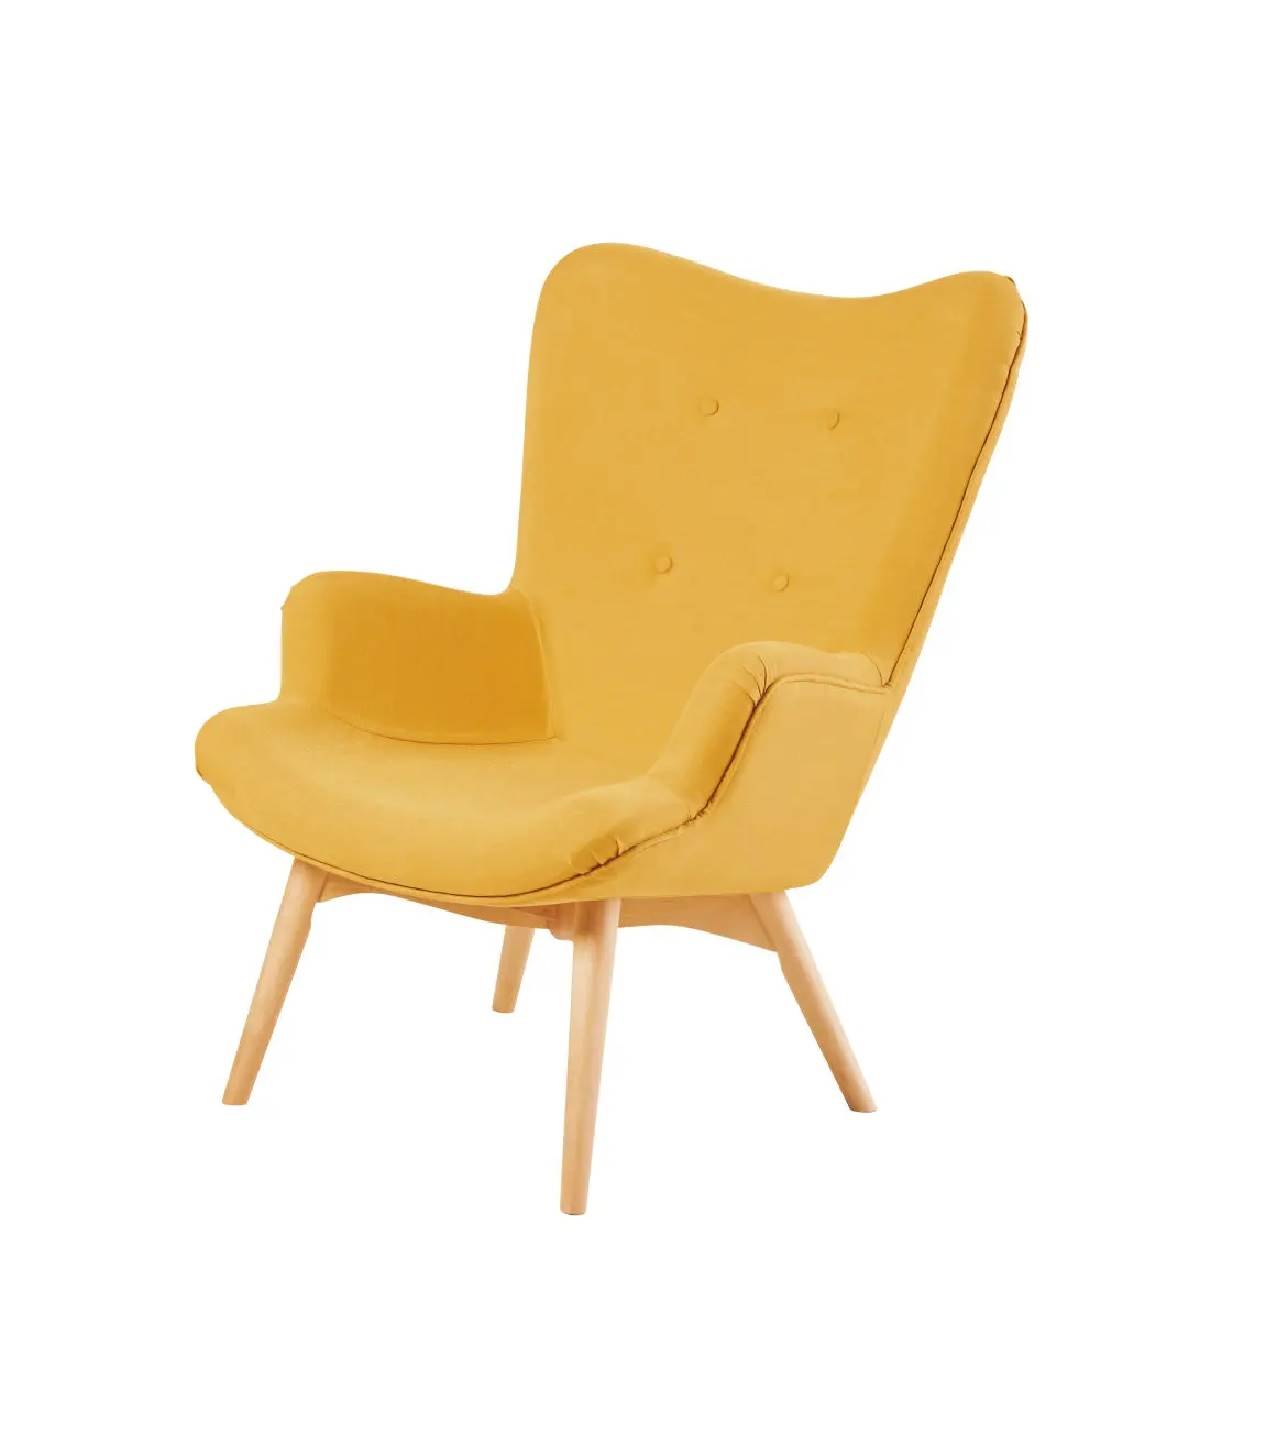 muebles para salones pequeños butaca escandinava amarilla Maisons du Monde, 299,00€